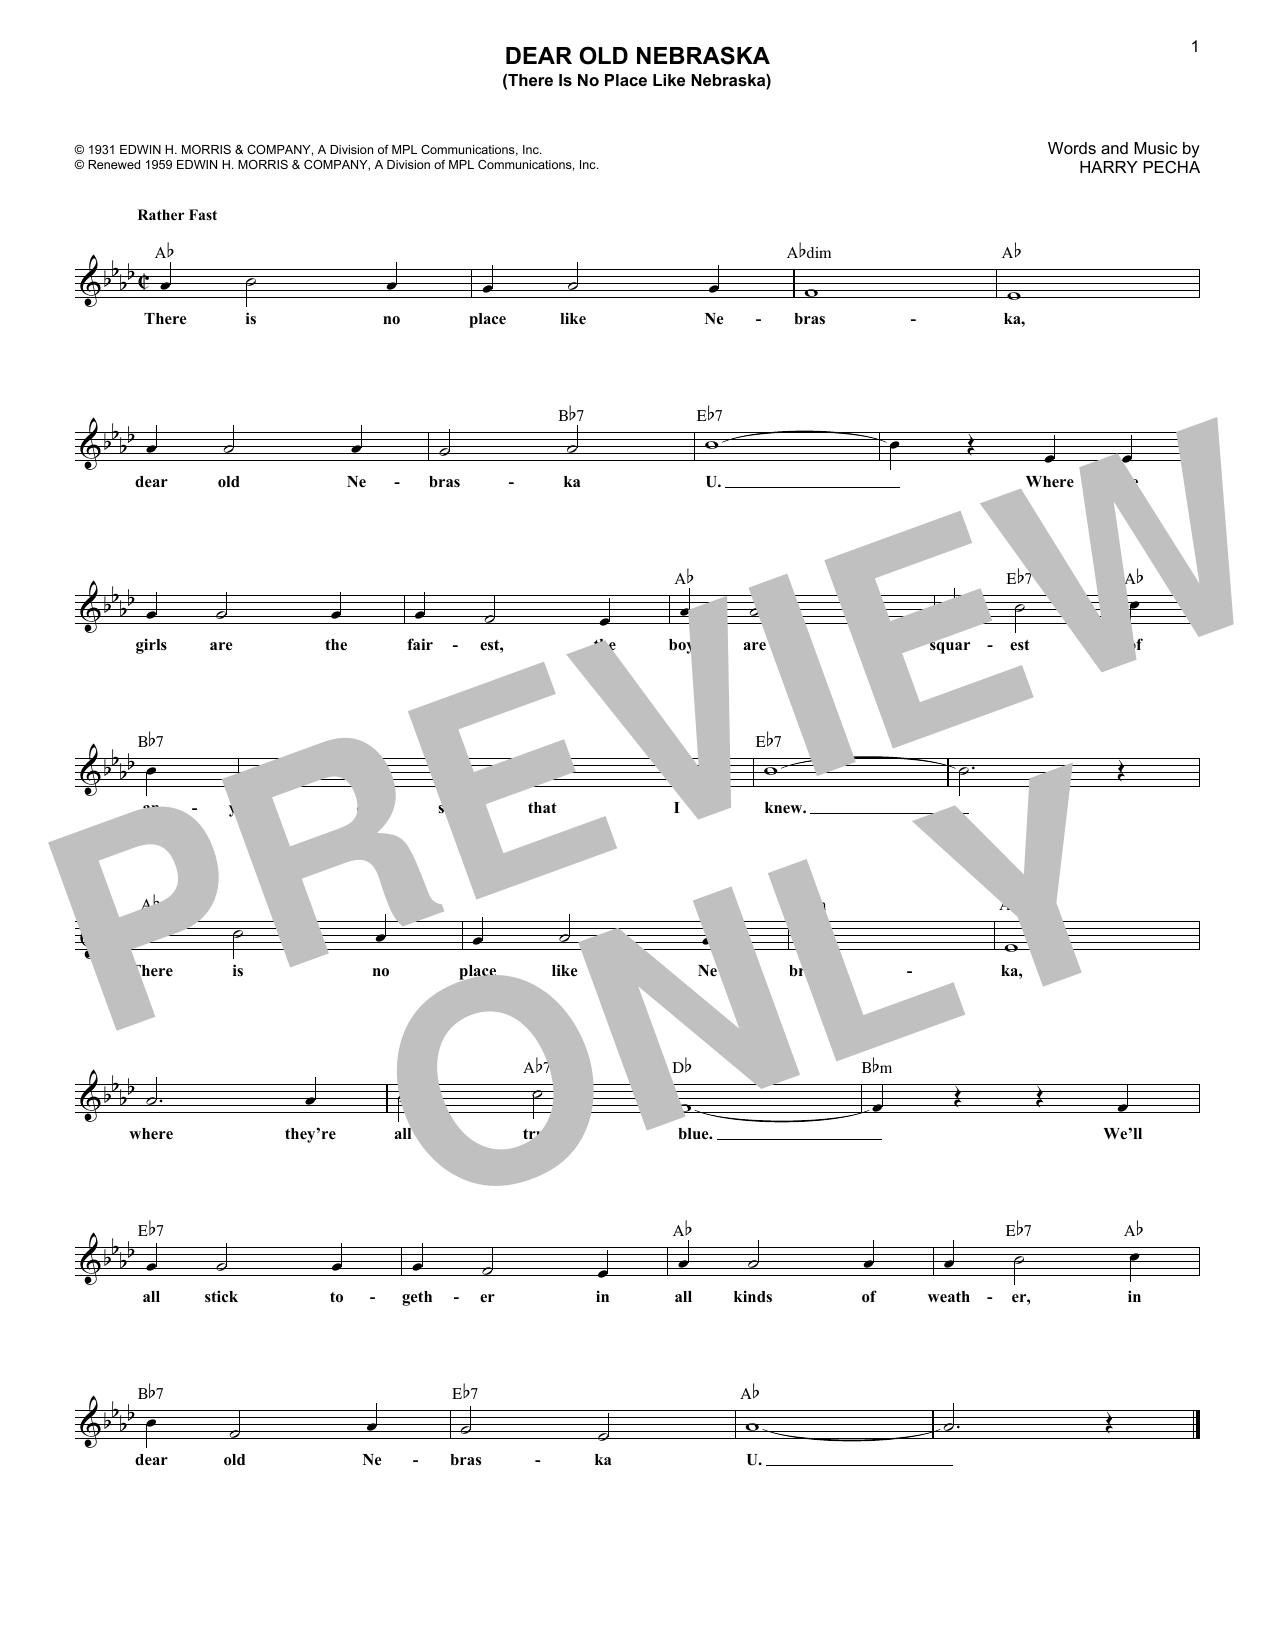 Harry Pecha Dear Old Nebraska U. (There Is No Place Like Nebraska) Sheet Music Notes & Chords for Melody Line, Lyrics & Chords - Download or Print PDF